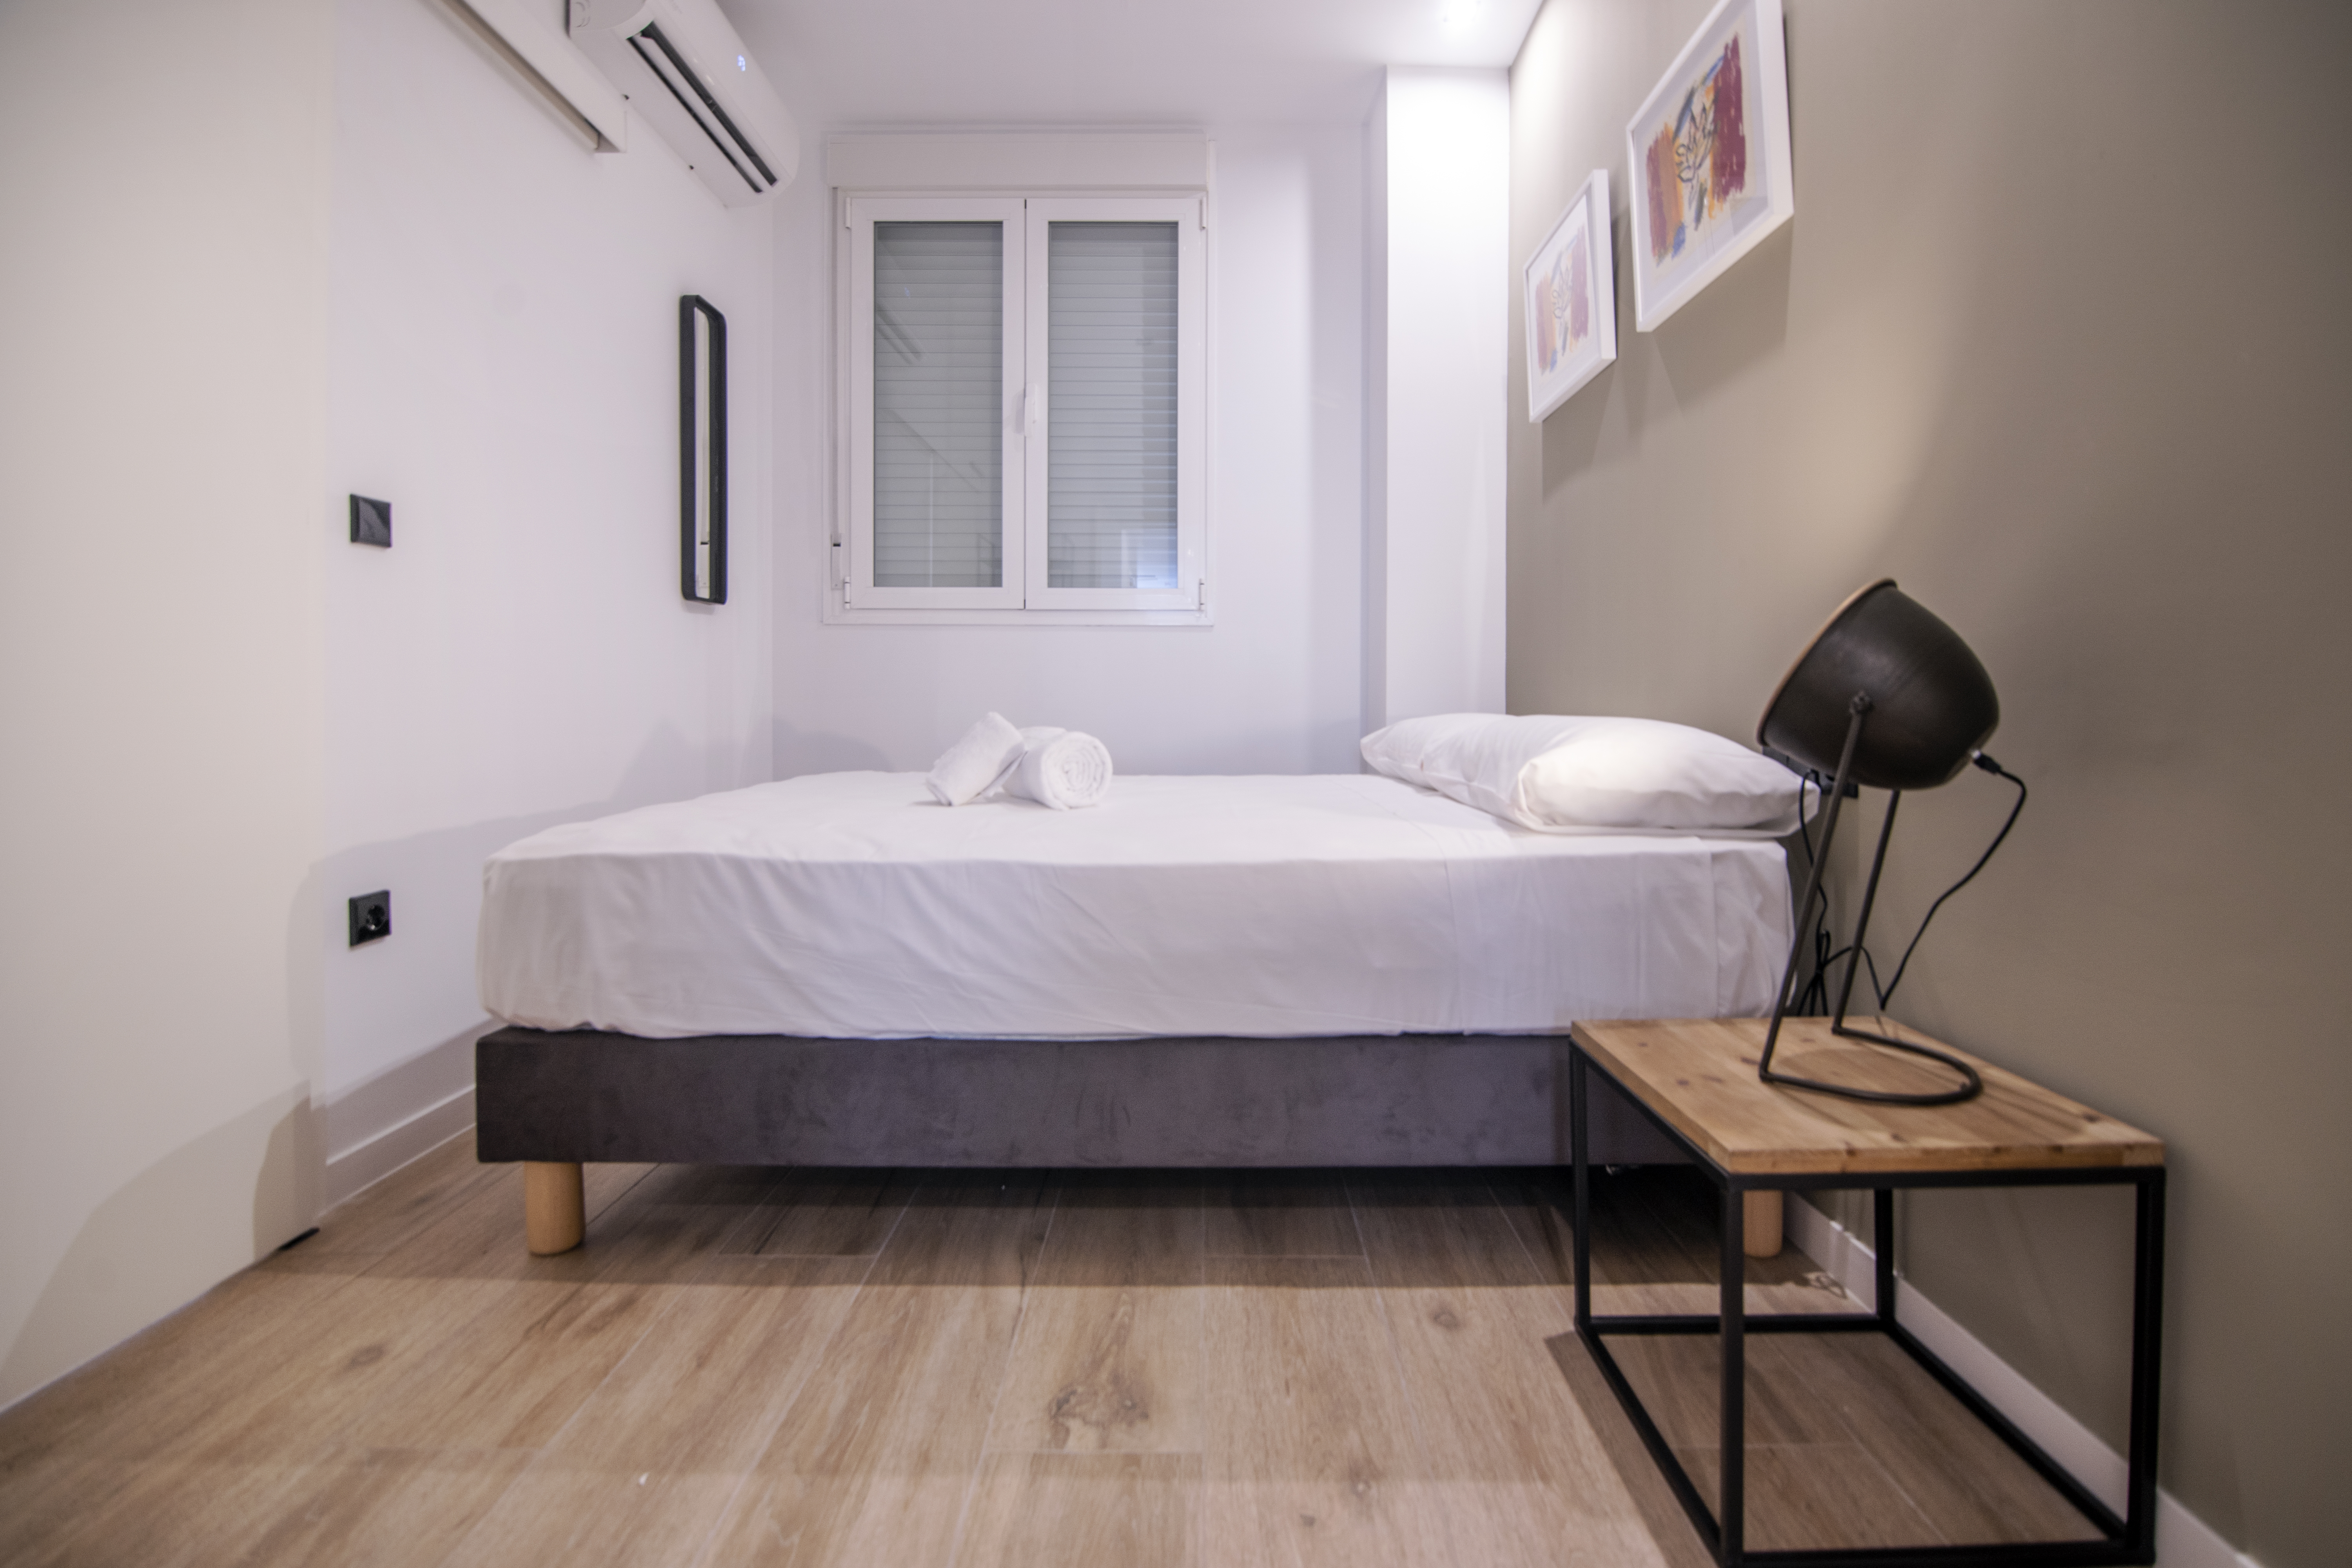 2T one bedroom apartment in the heart of the city 15 VLC HOST: Alquiler apartamentos corta duración